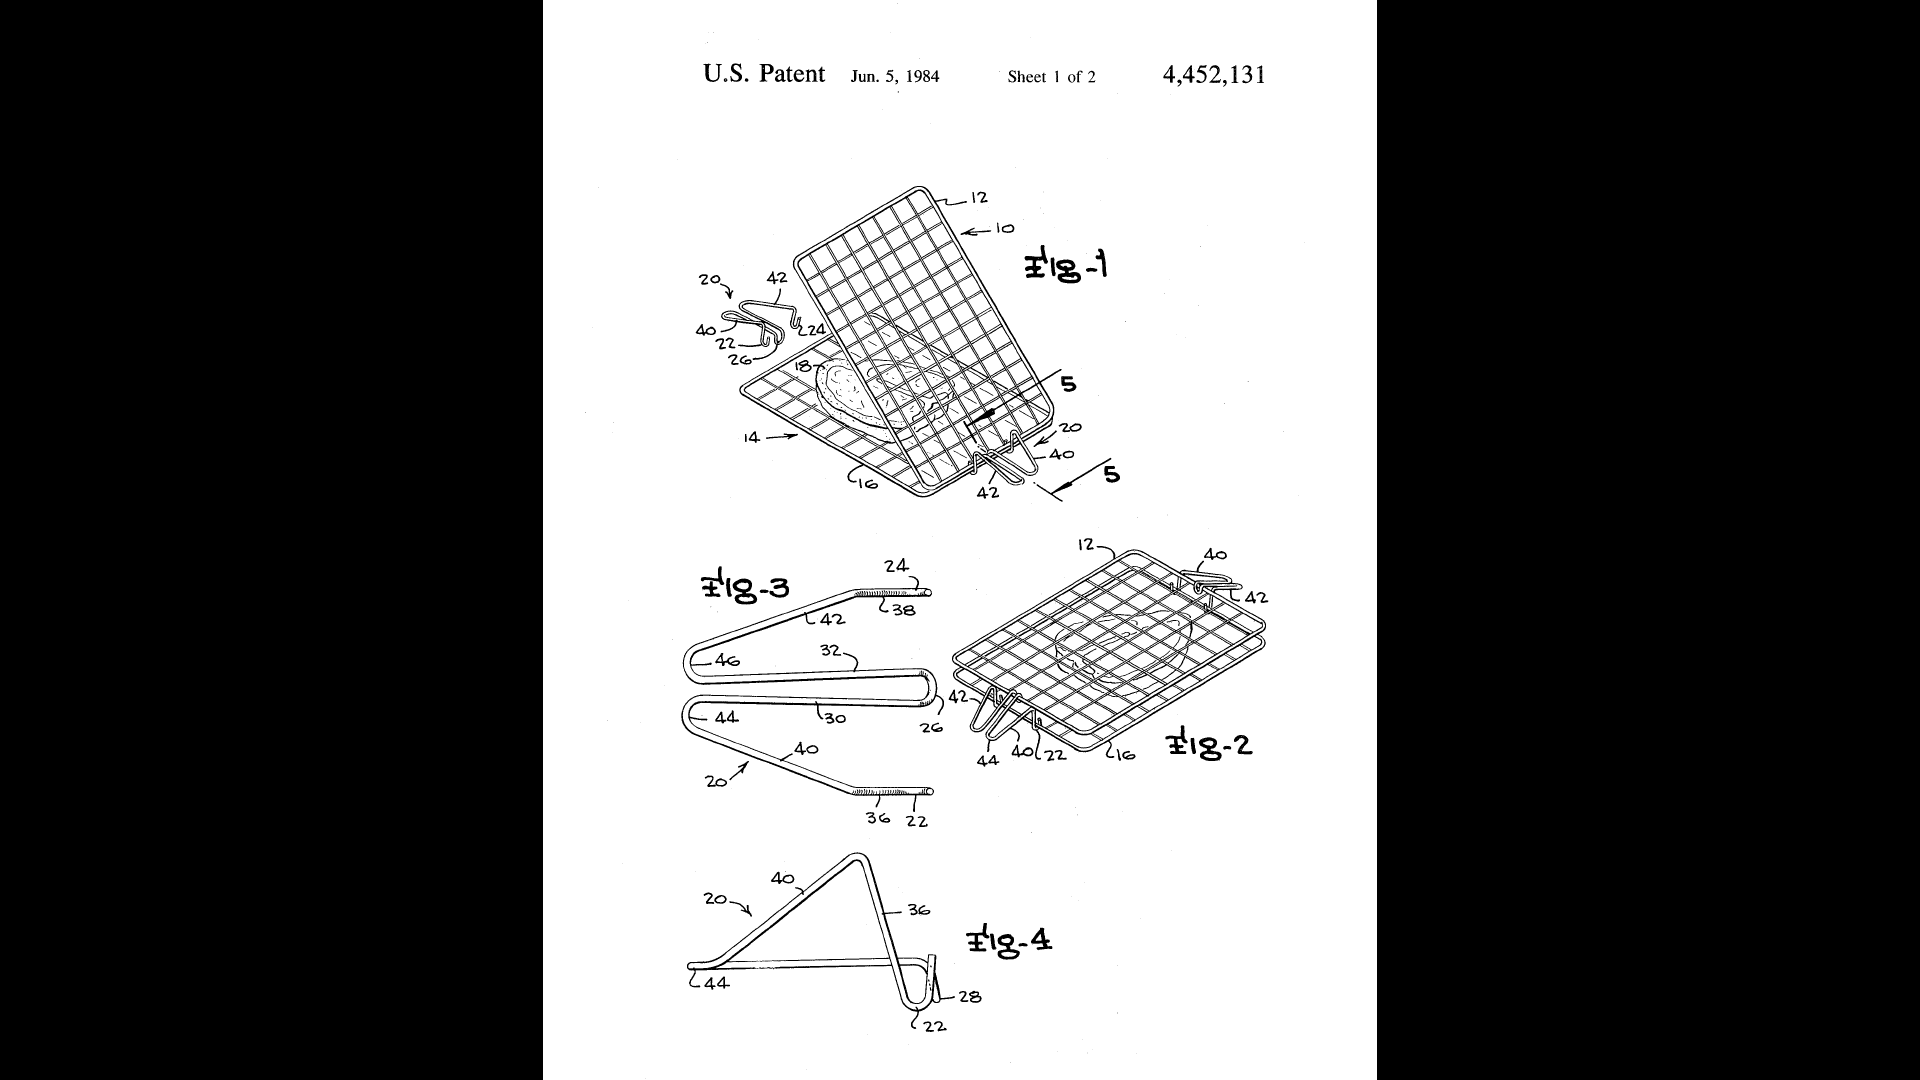 Tom Gaskins Patent No. 4,452,131